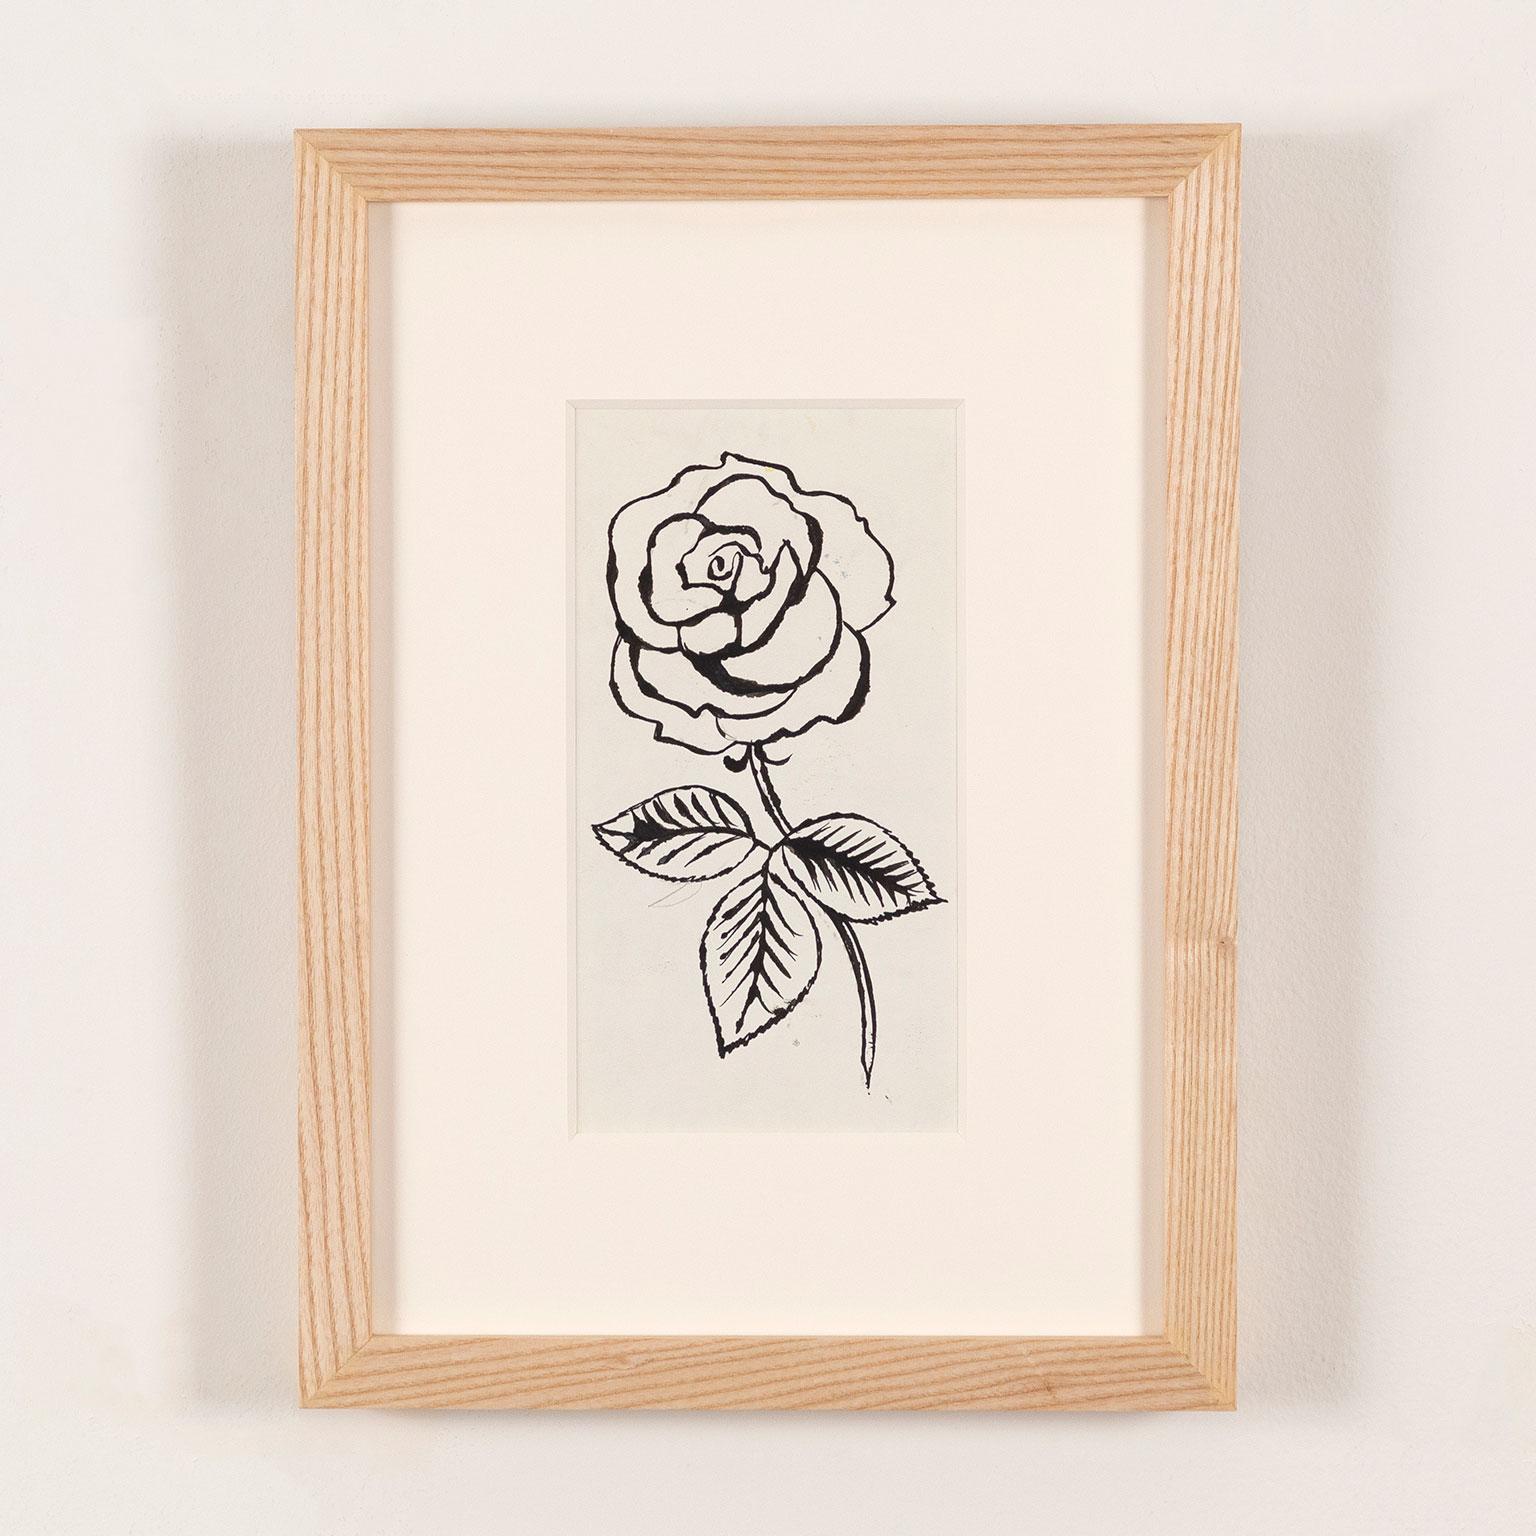 Andy Warhol Figurative Art - Rose